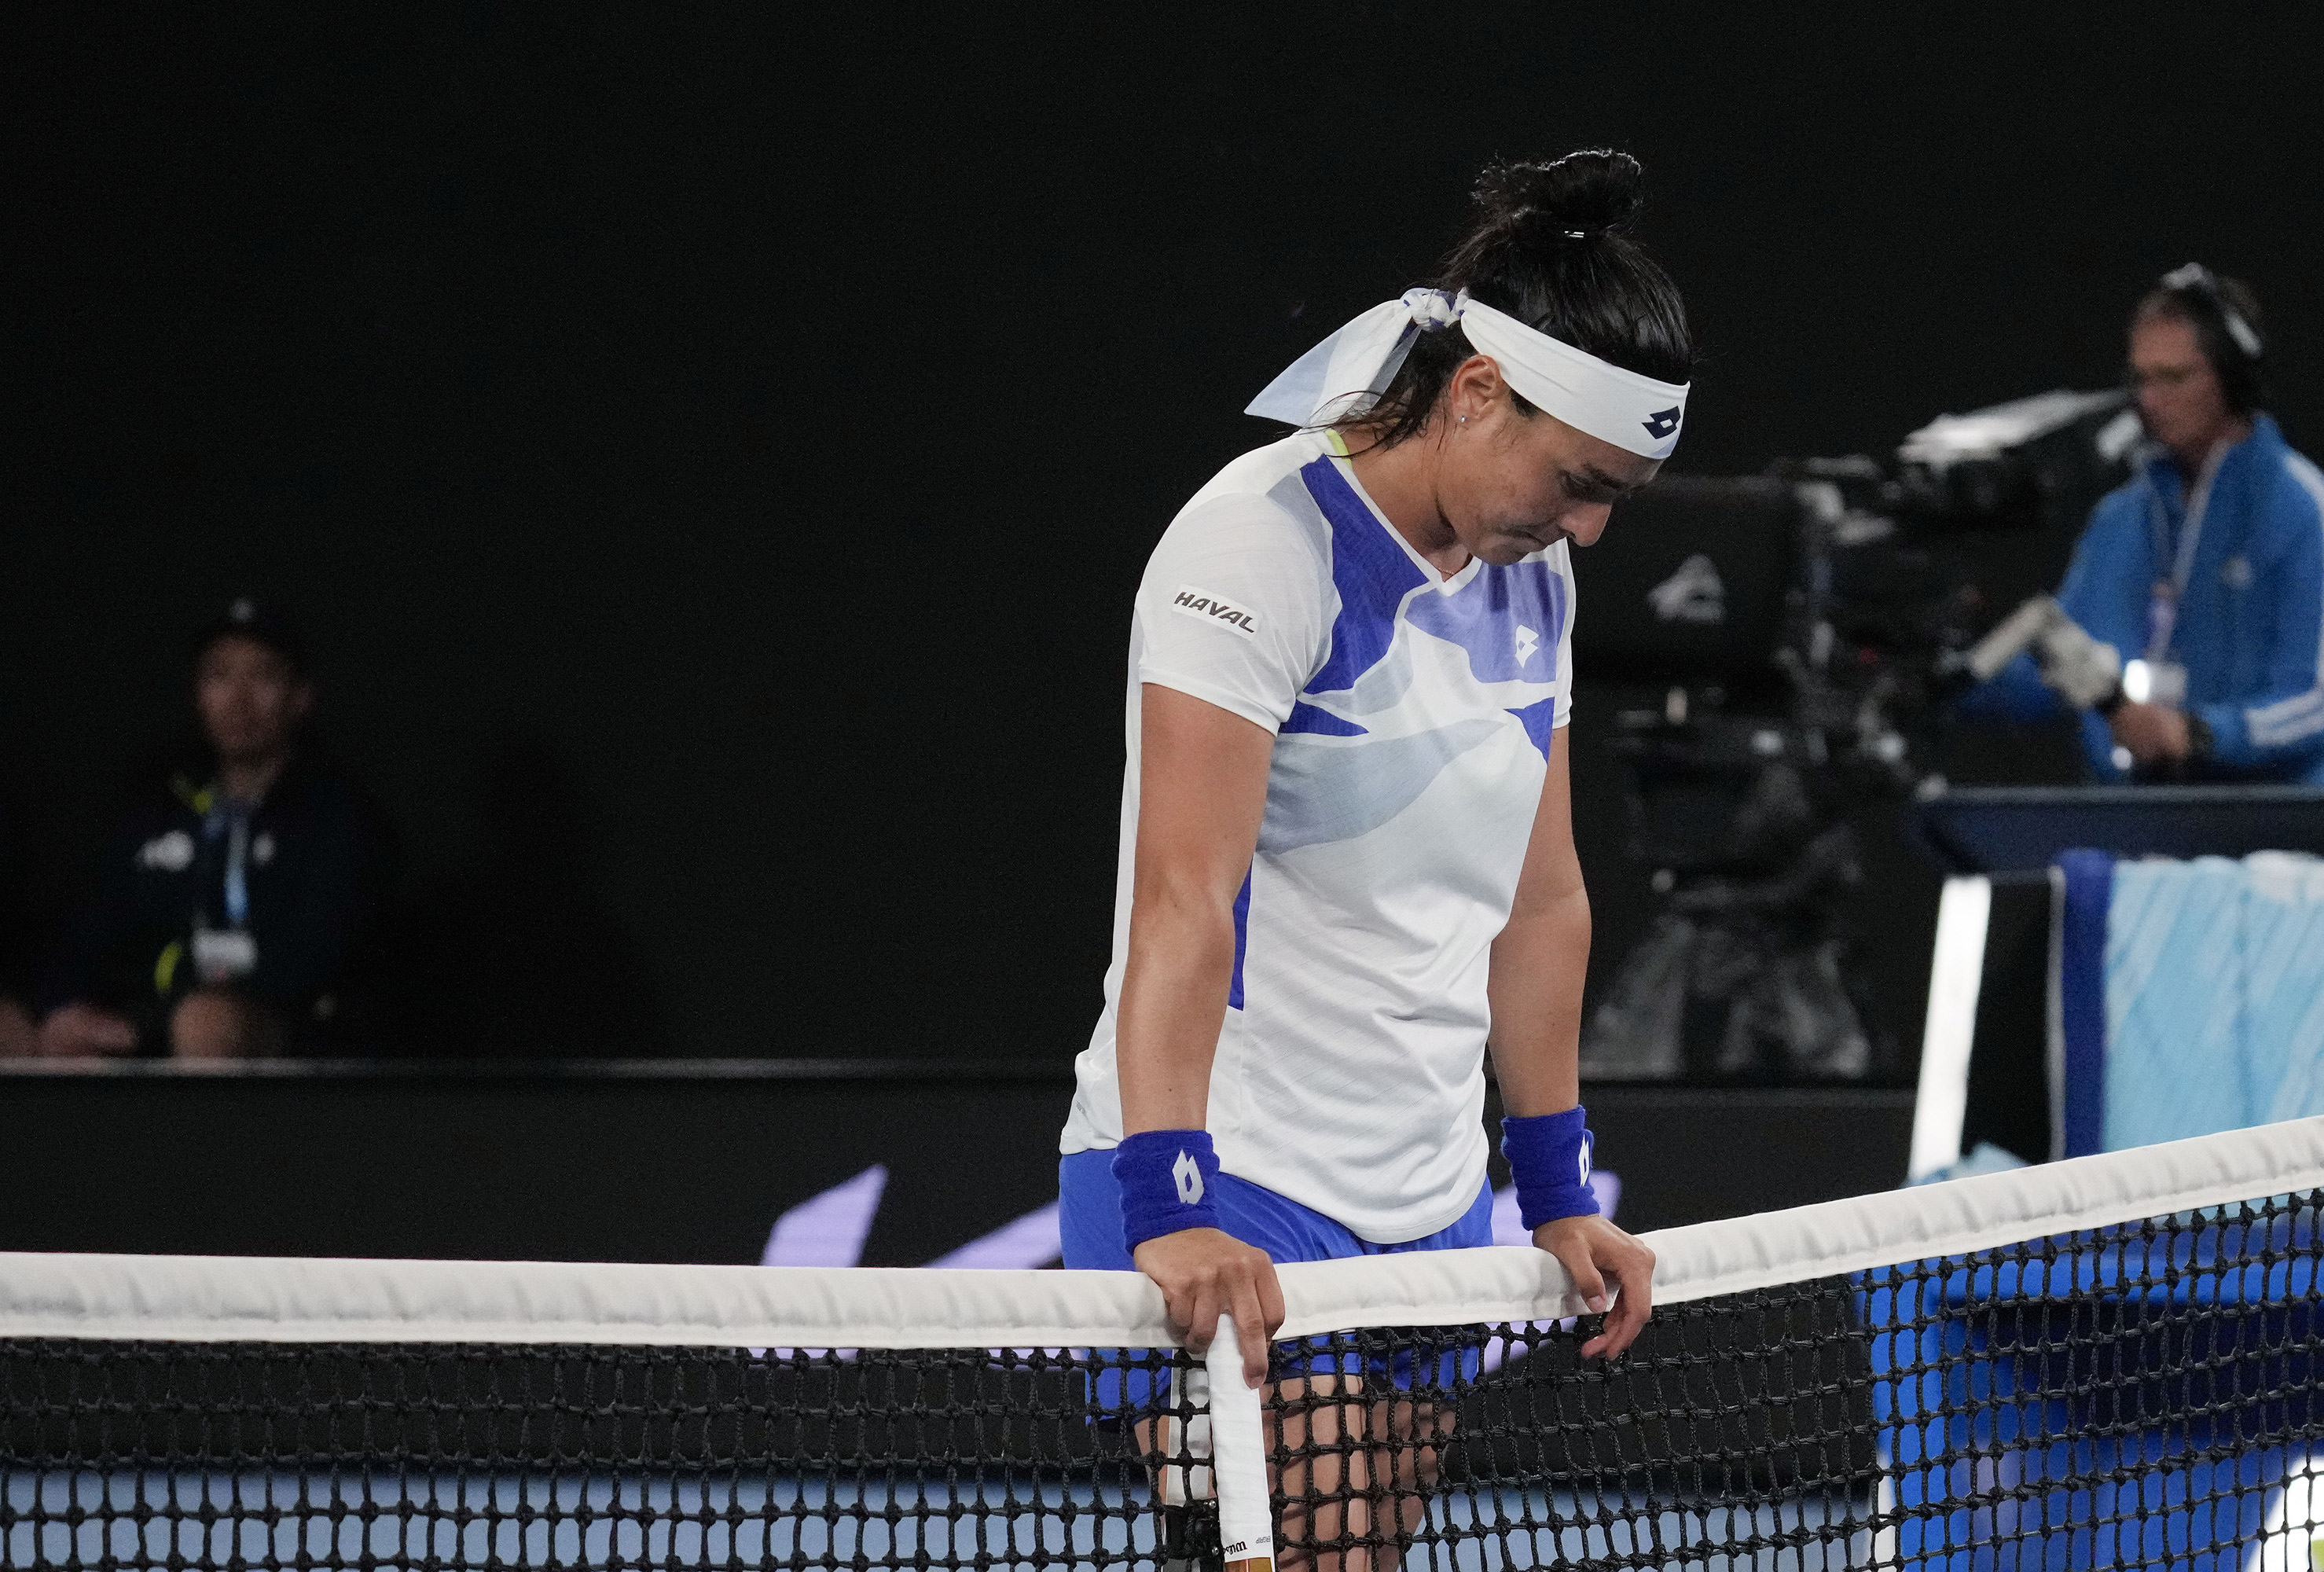 Ons Jabeur and Novak Djokovic confirmed for 2023 Dubai Tennis